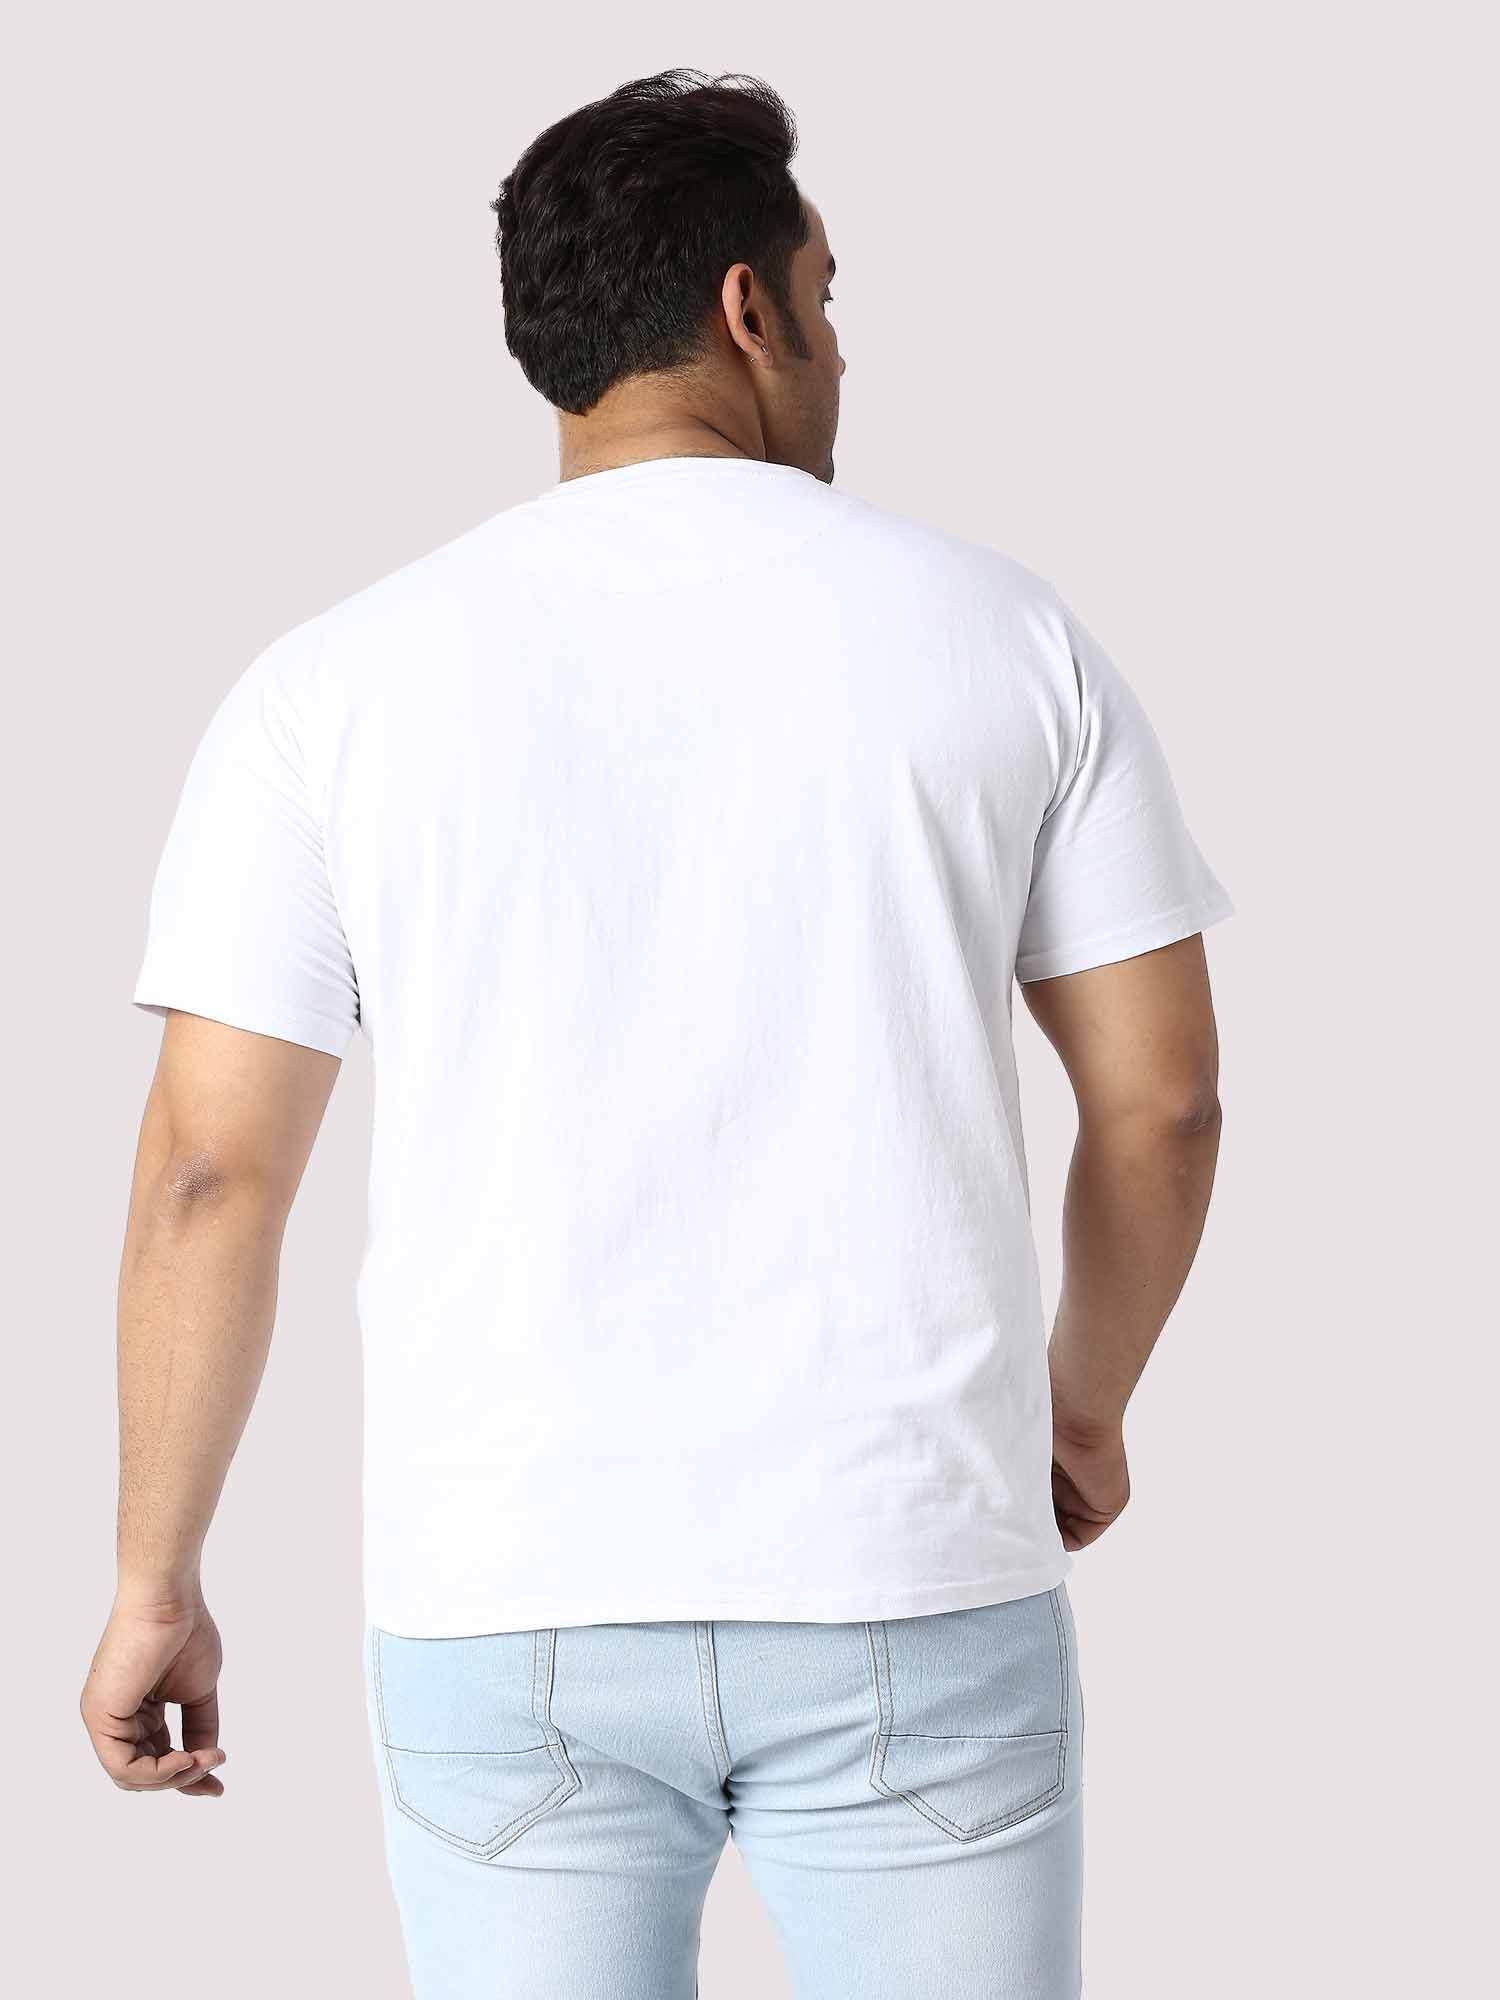 Men Plus Size White Always Be Cool Printed Round Neck T-Shirt - Guniaa Fashions